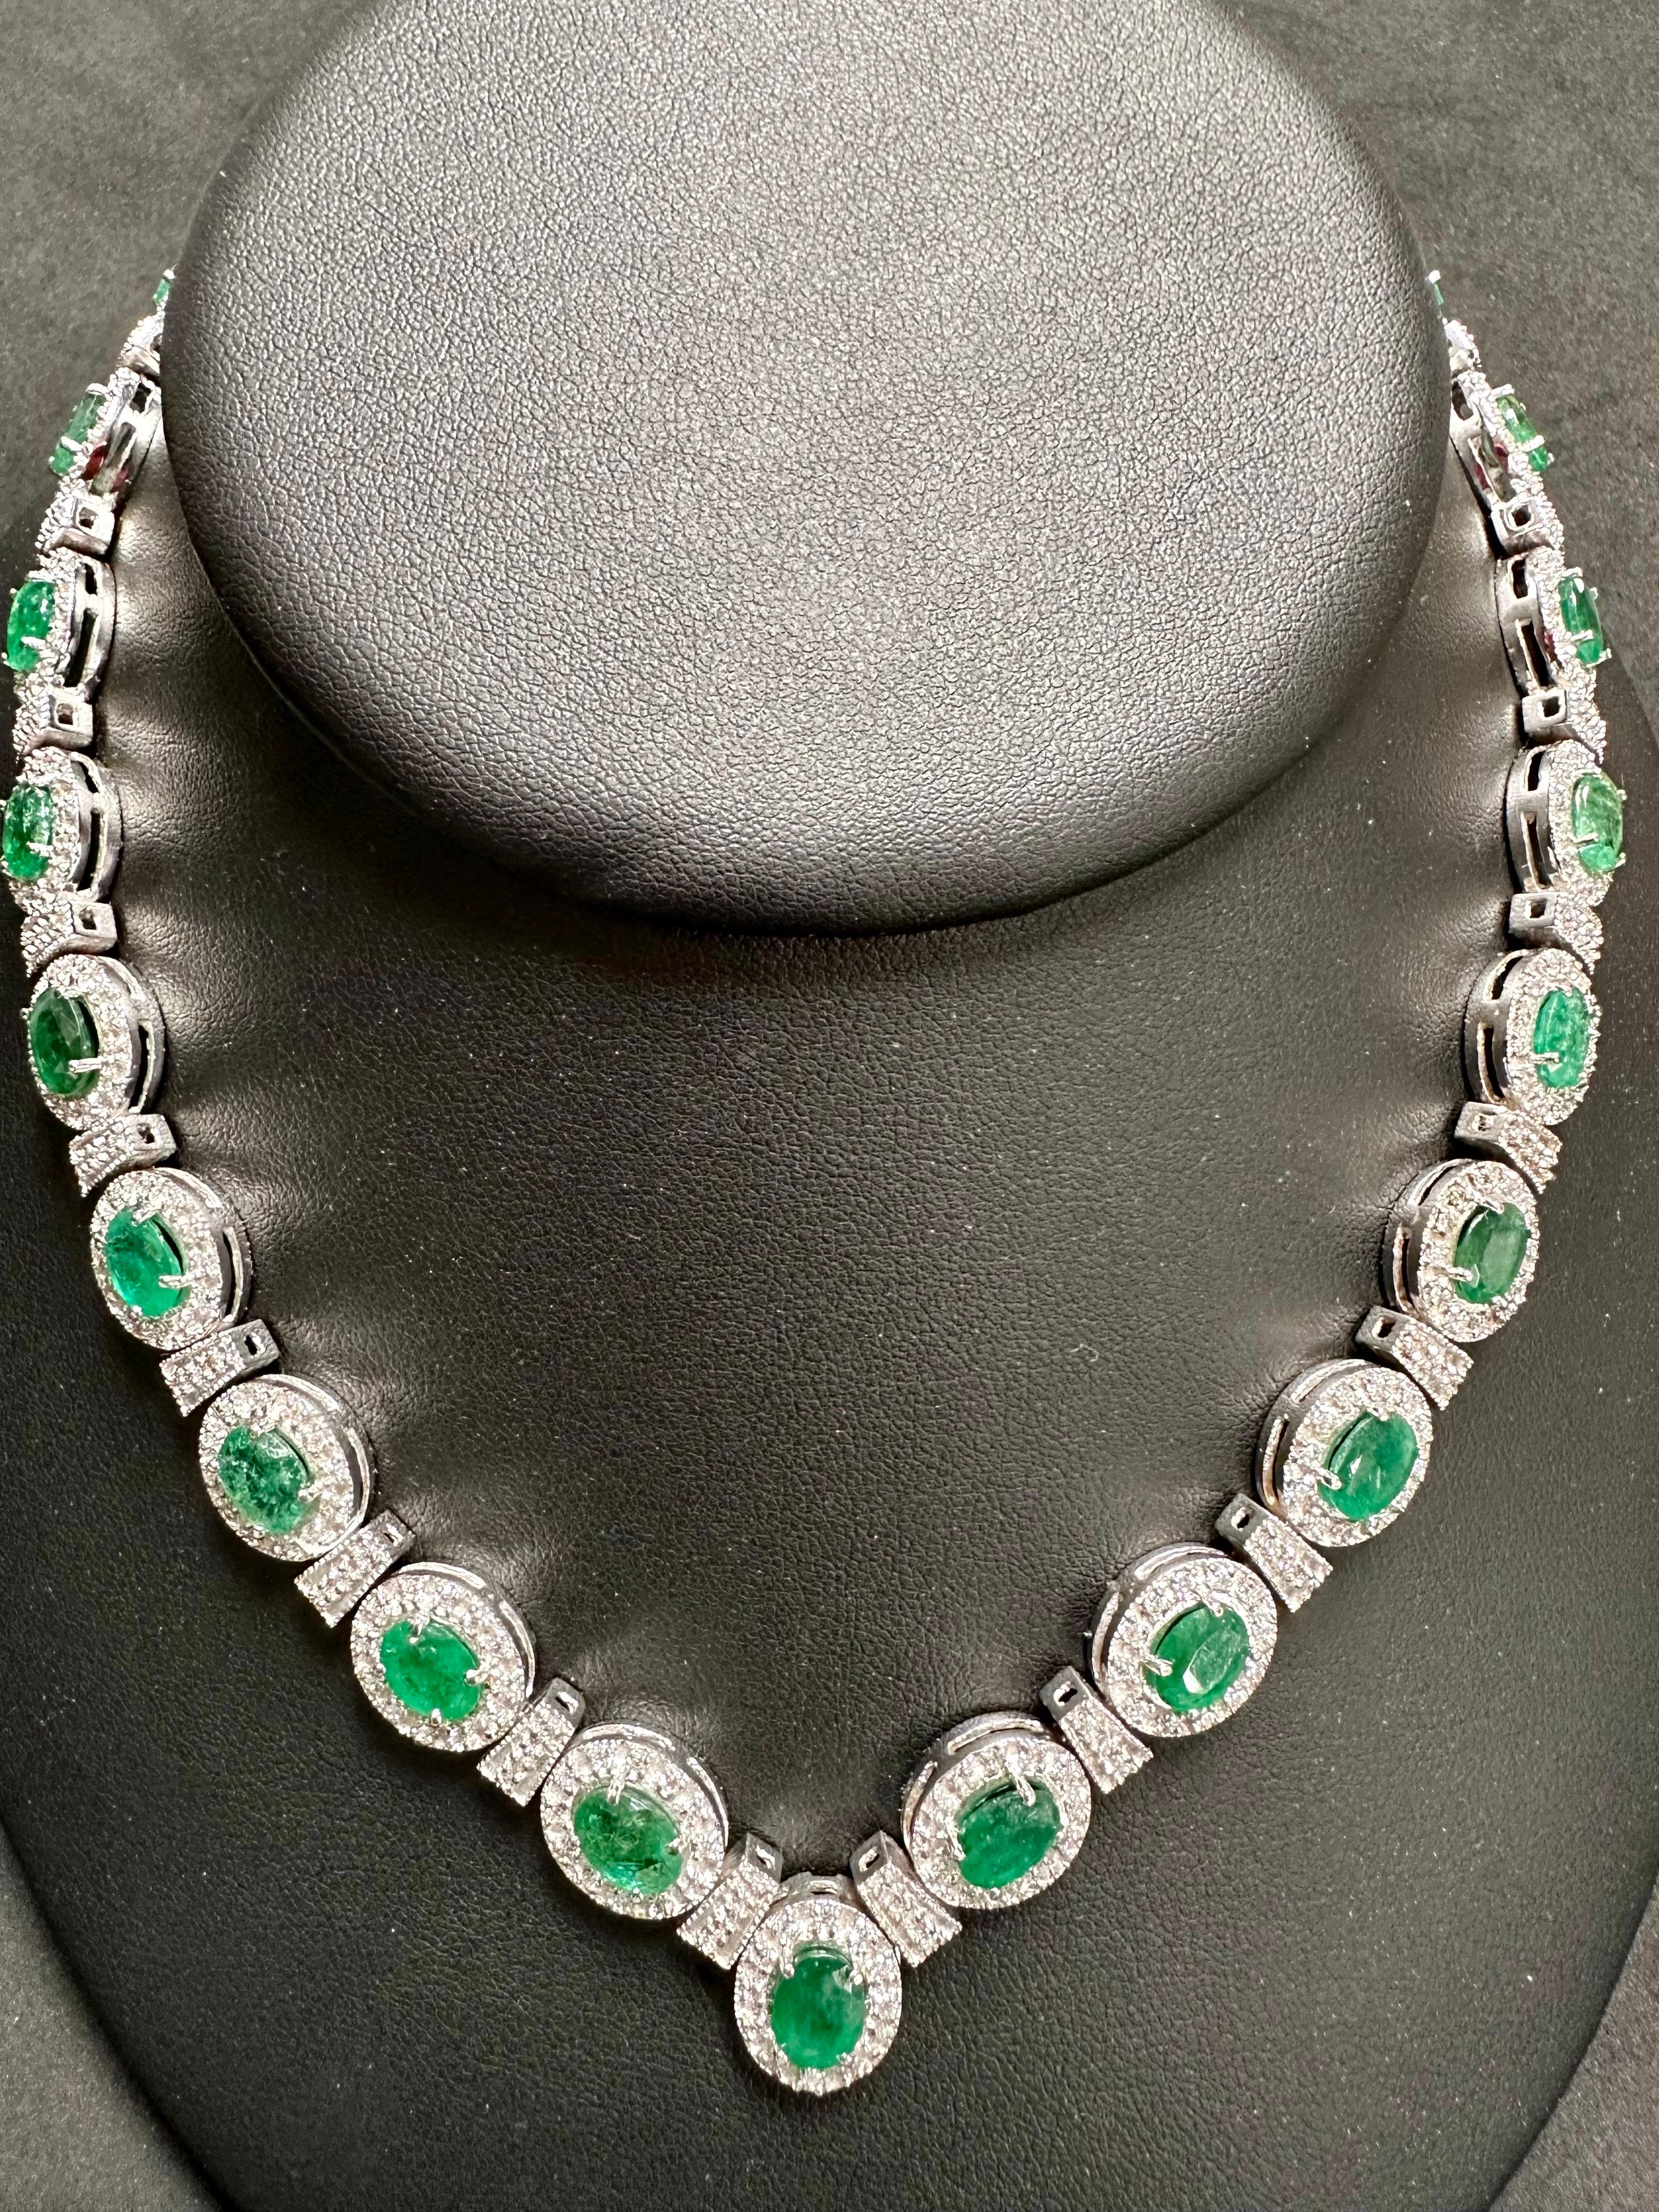 Oval Cut 28 Carat Oval Shape Natural Emerald & 5 Carat Diamond Necklace in 14 Karat Gold For Sale